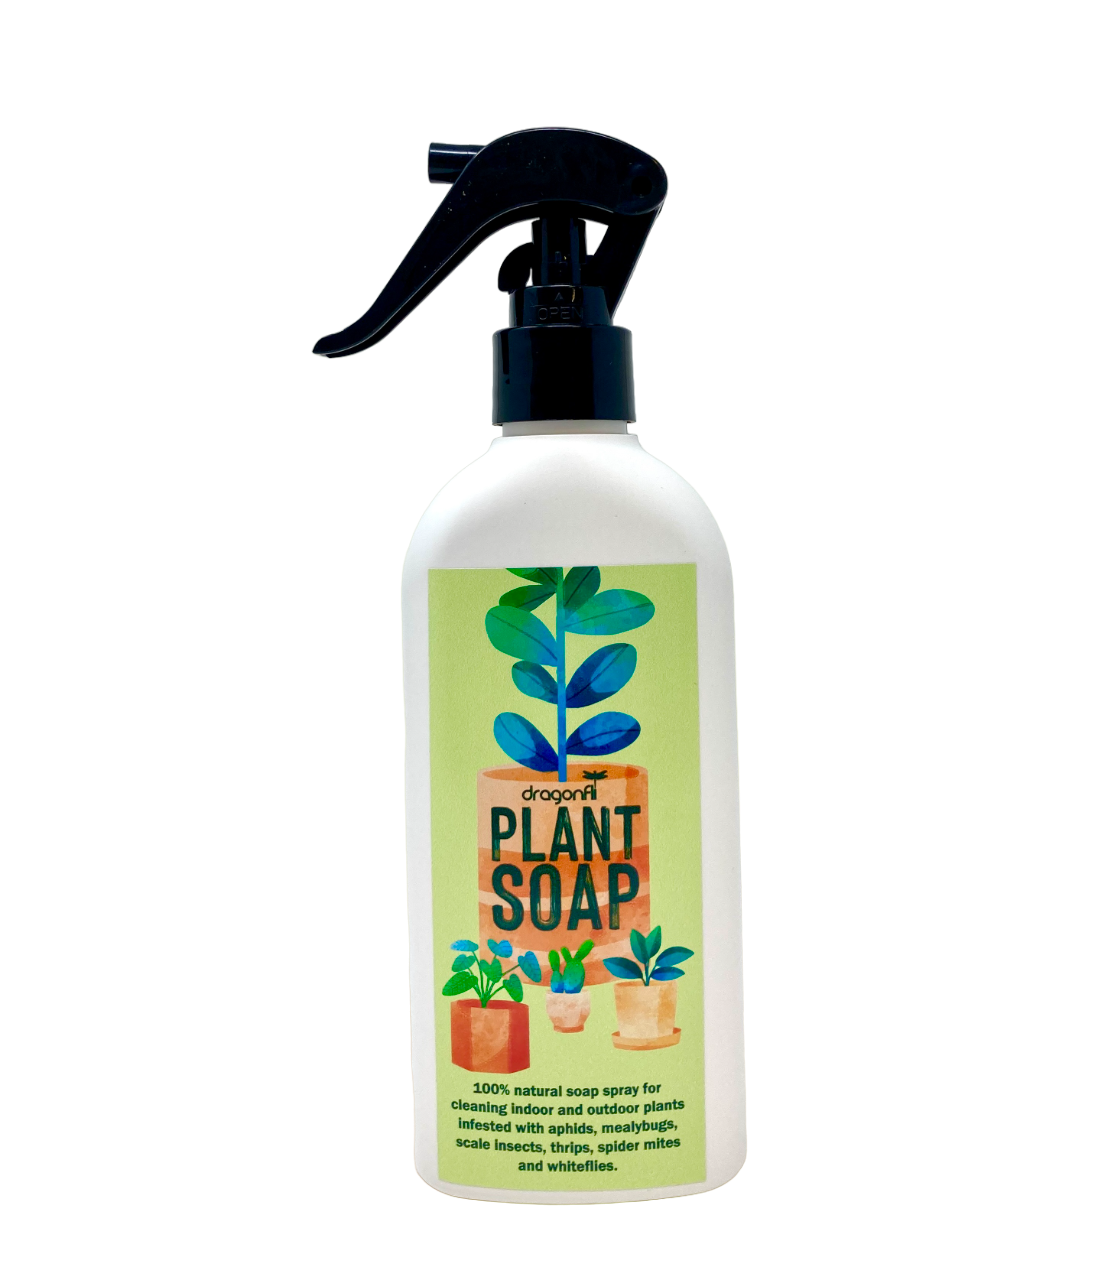 Dragonfli Plant Soap